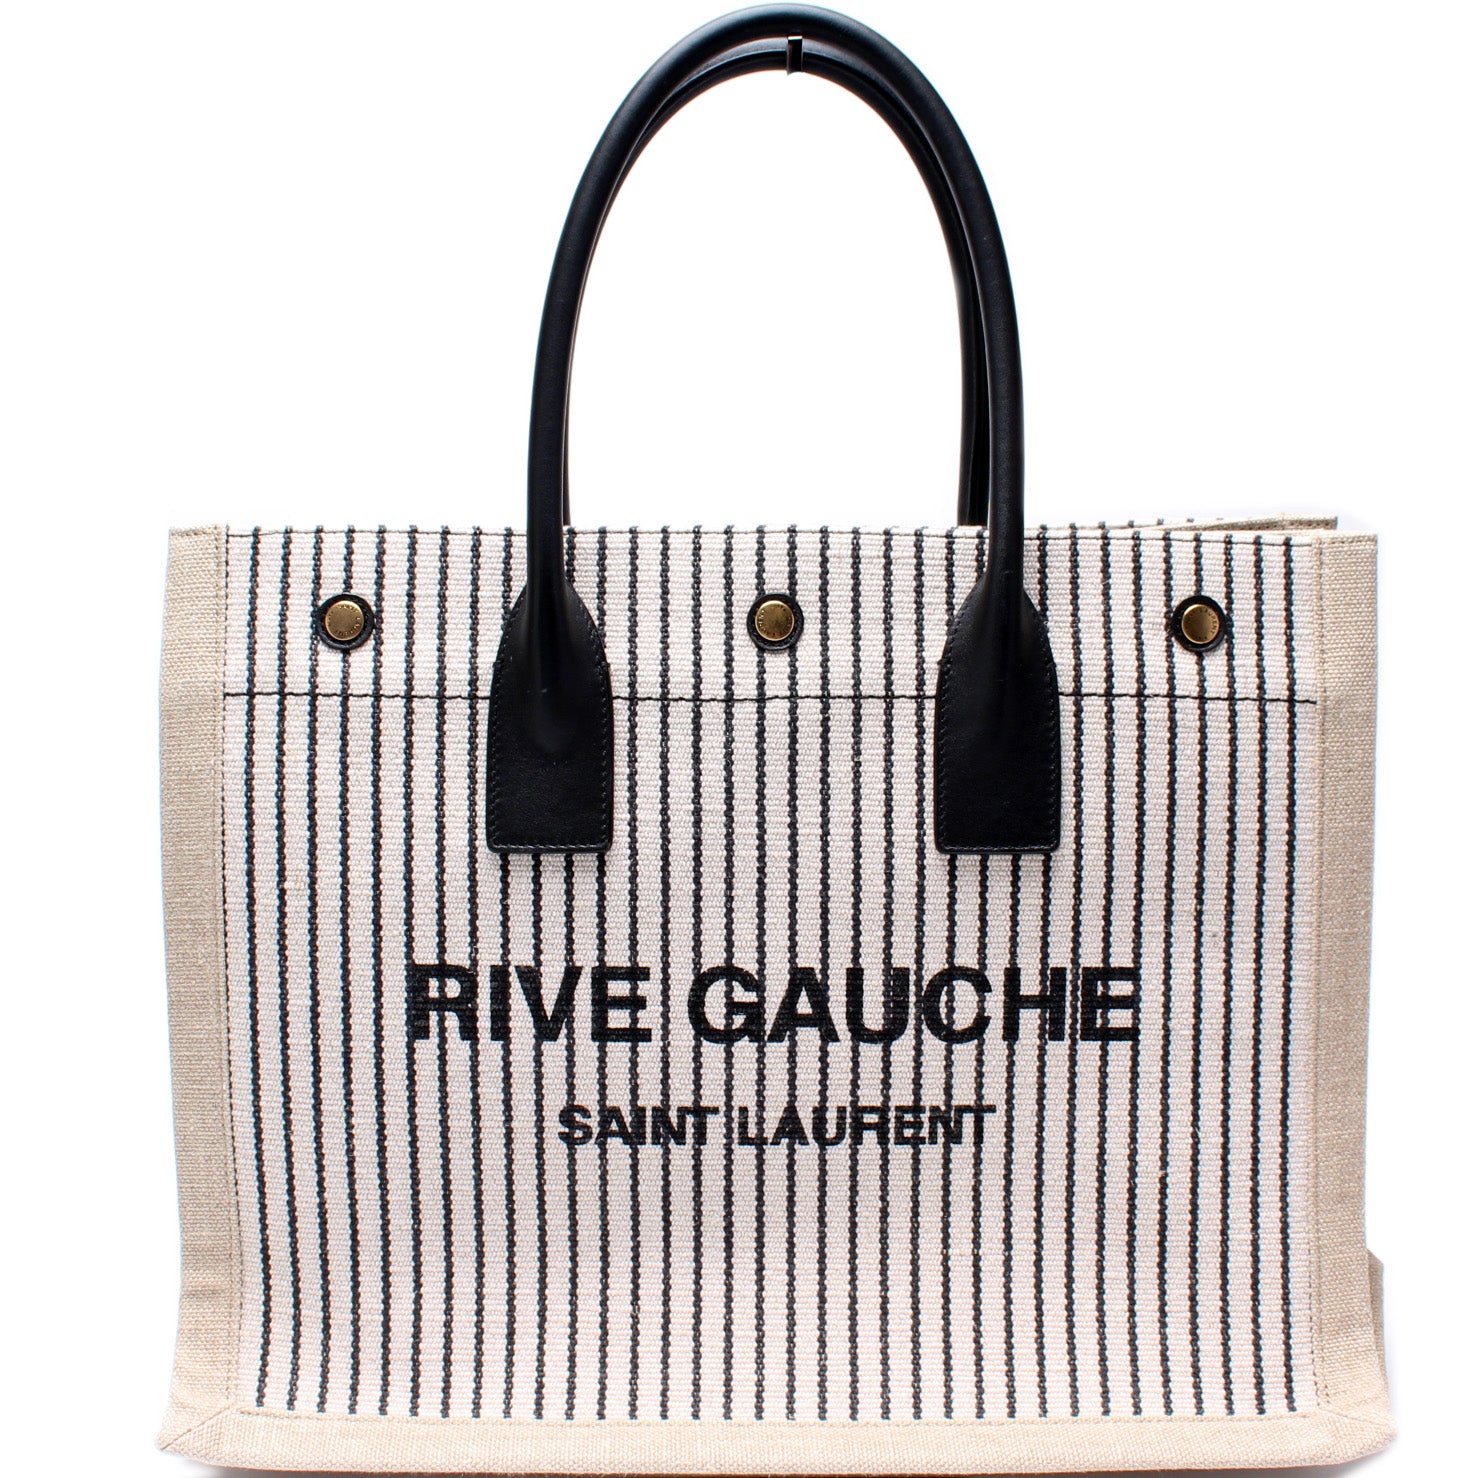 Saint Laurent Small black Rive Gauche bag